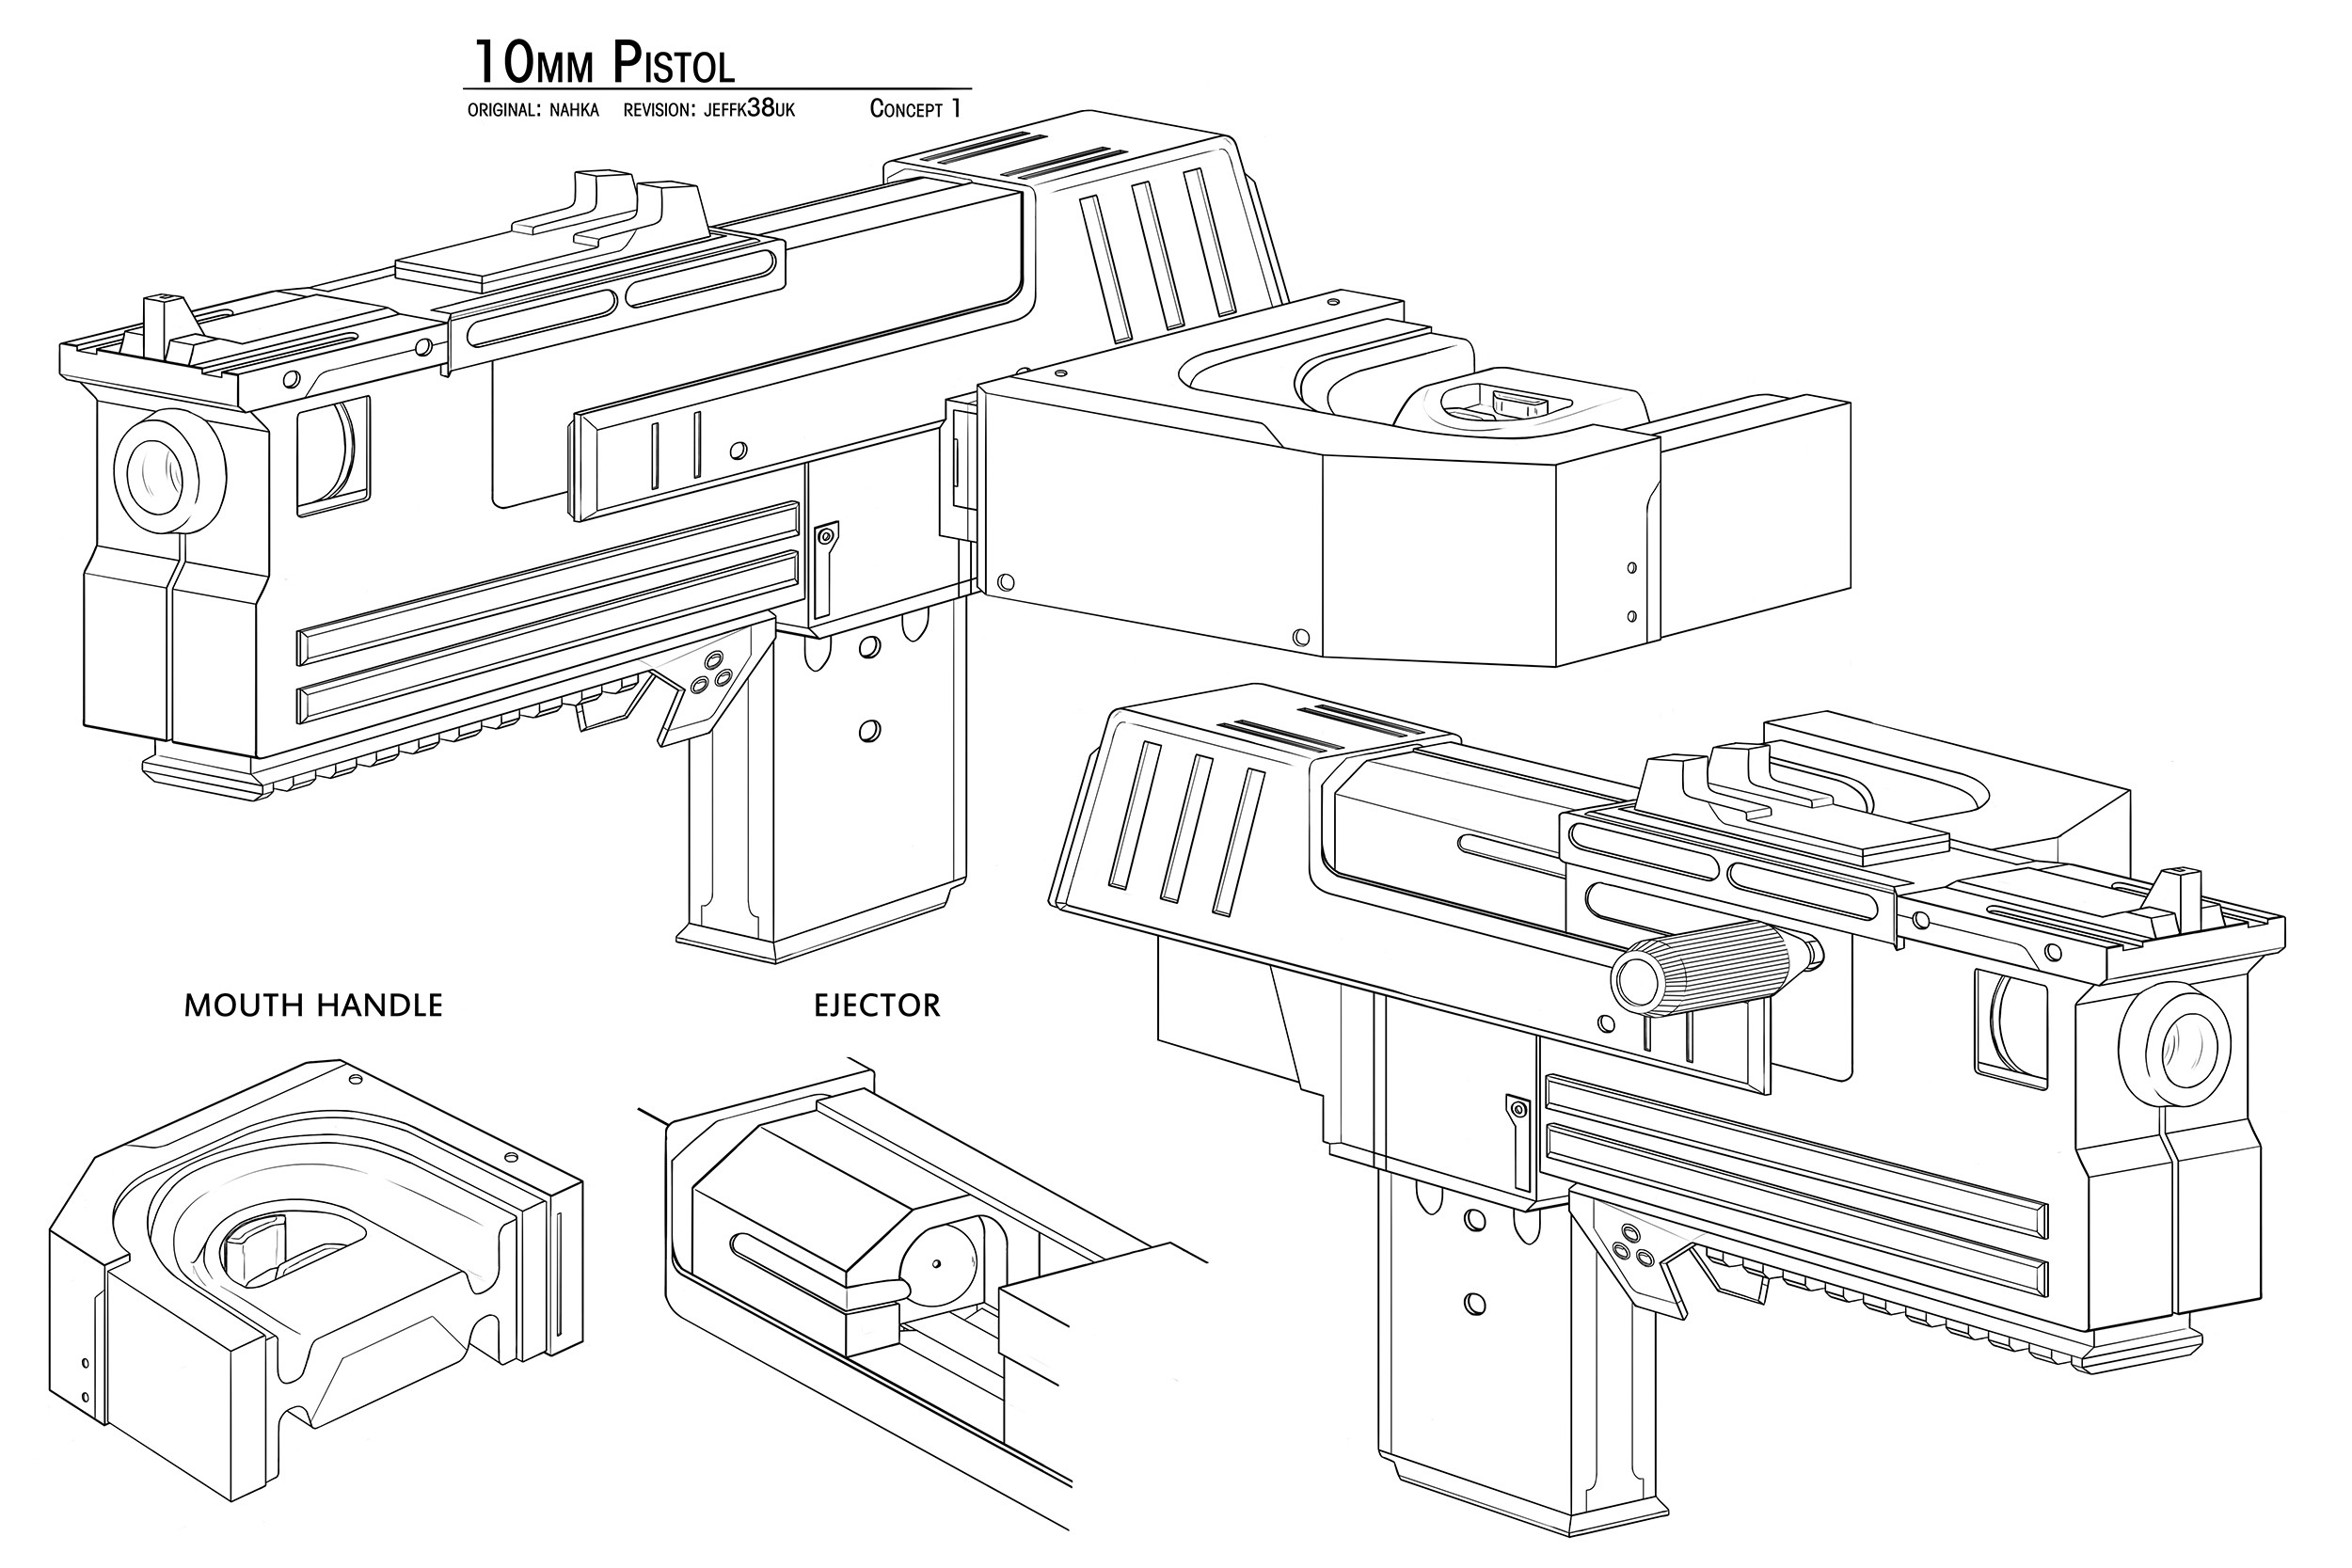 10mm pistol concept